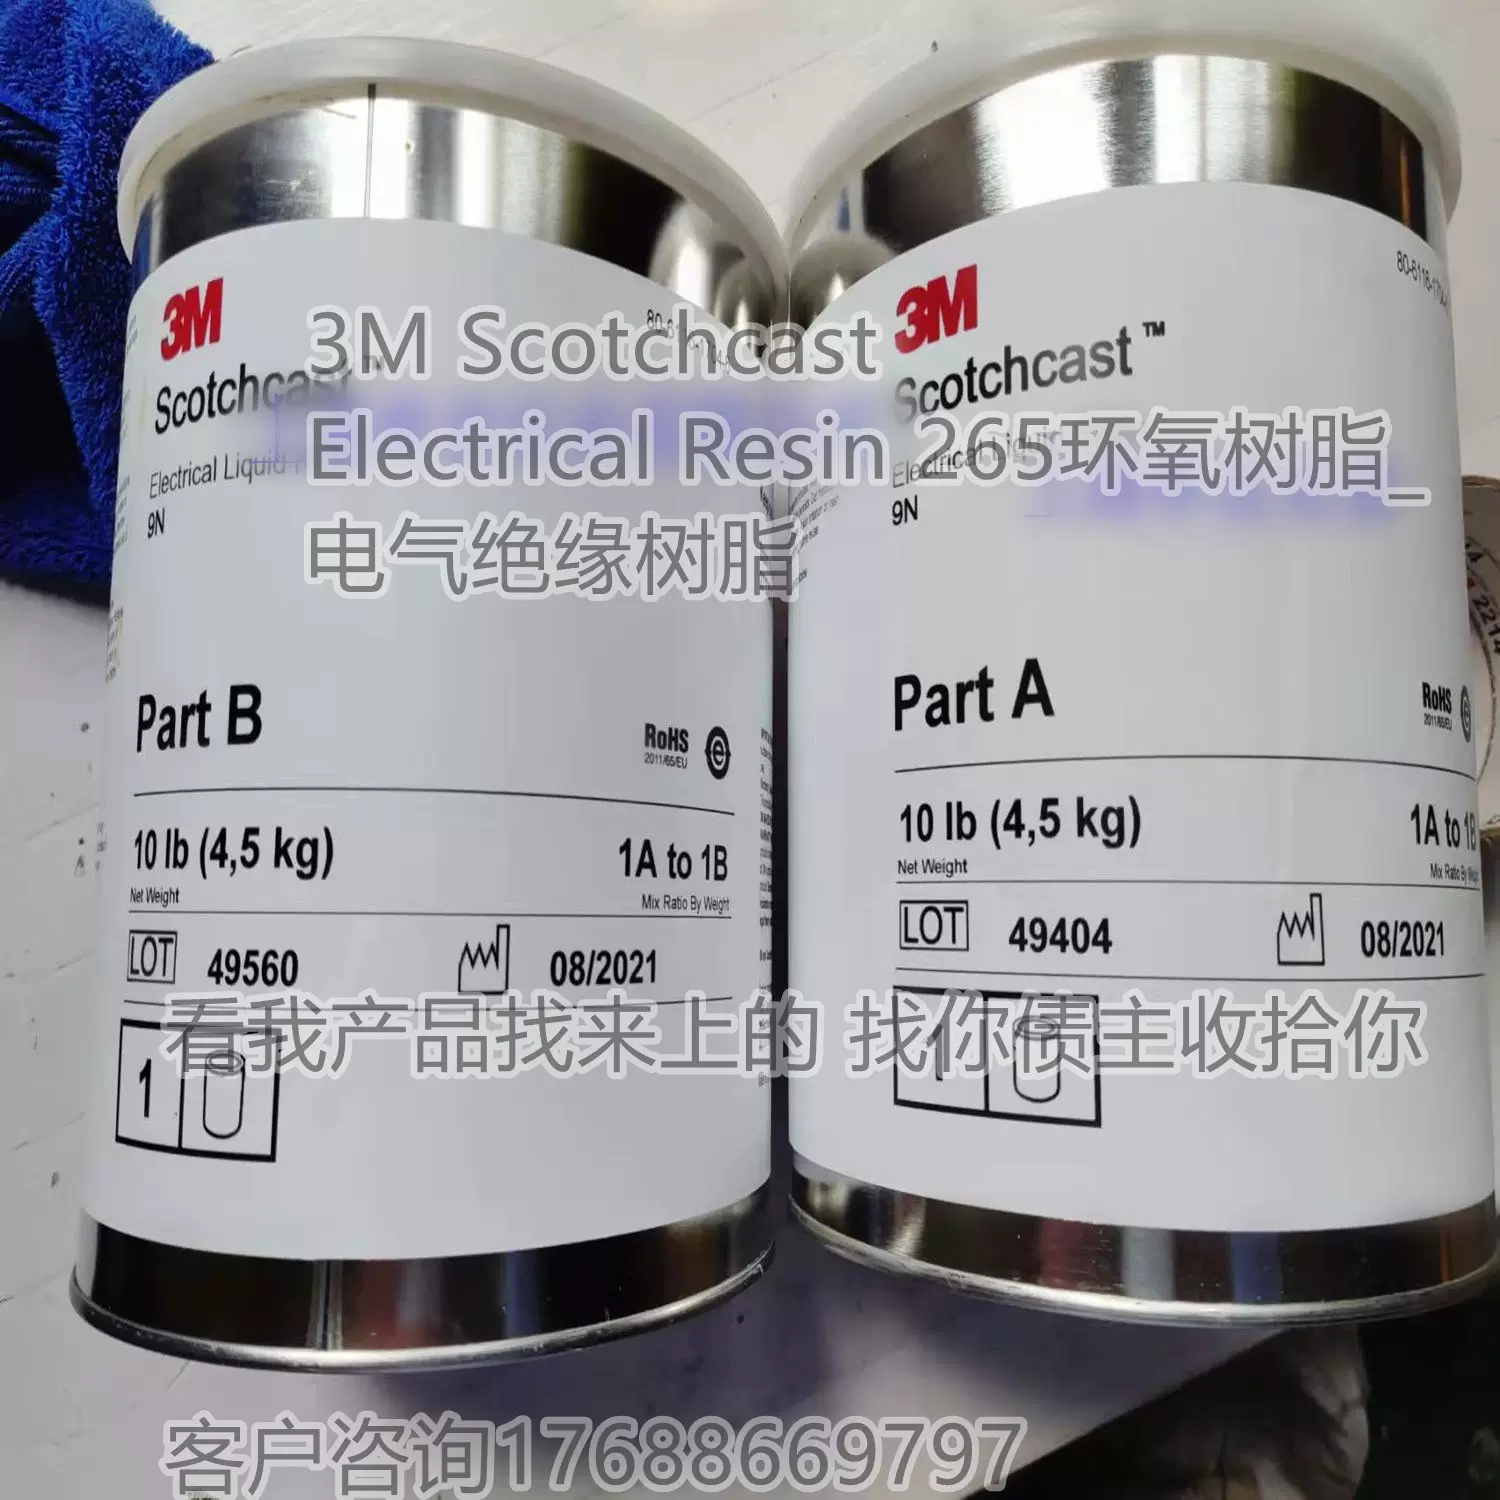 3M Scotchcast Electrical Resin 265環氧樹脂_電氣絕緣樹脂-Taobao